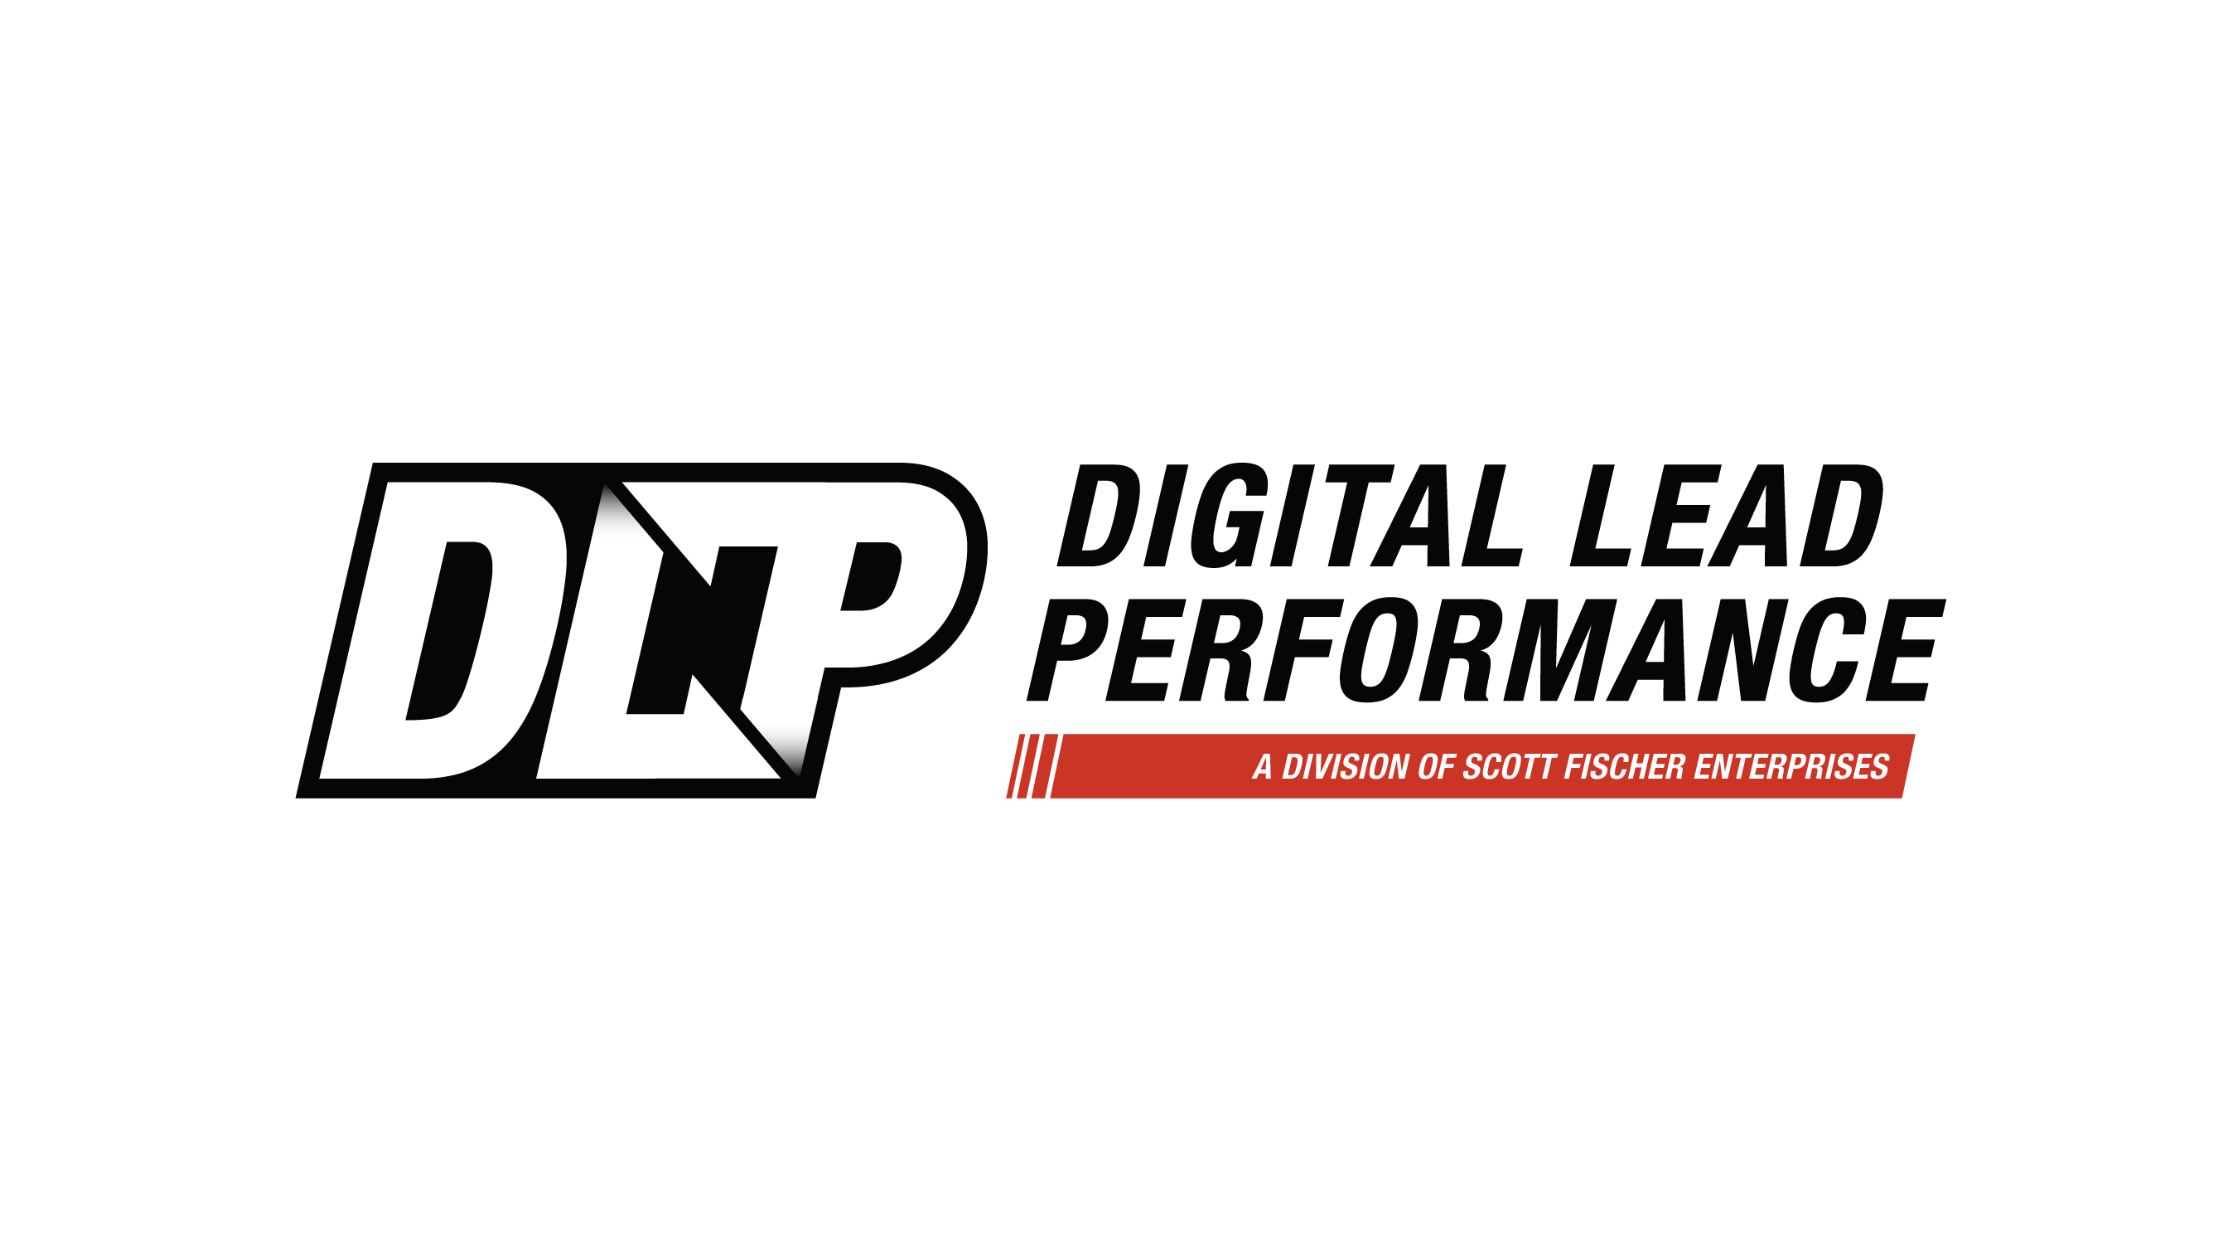 Digital Lead Performance unveils innovative sales software platform